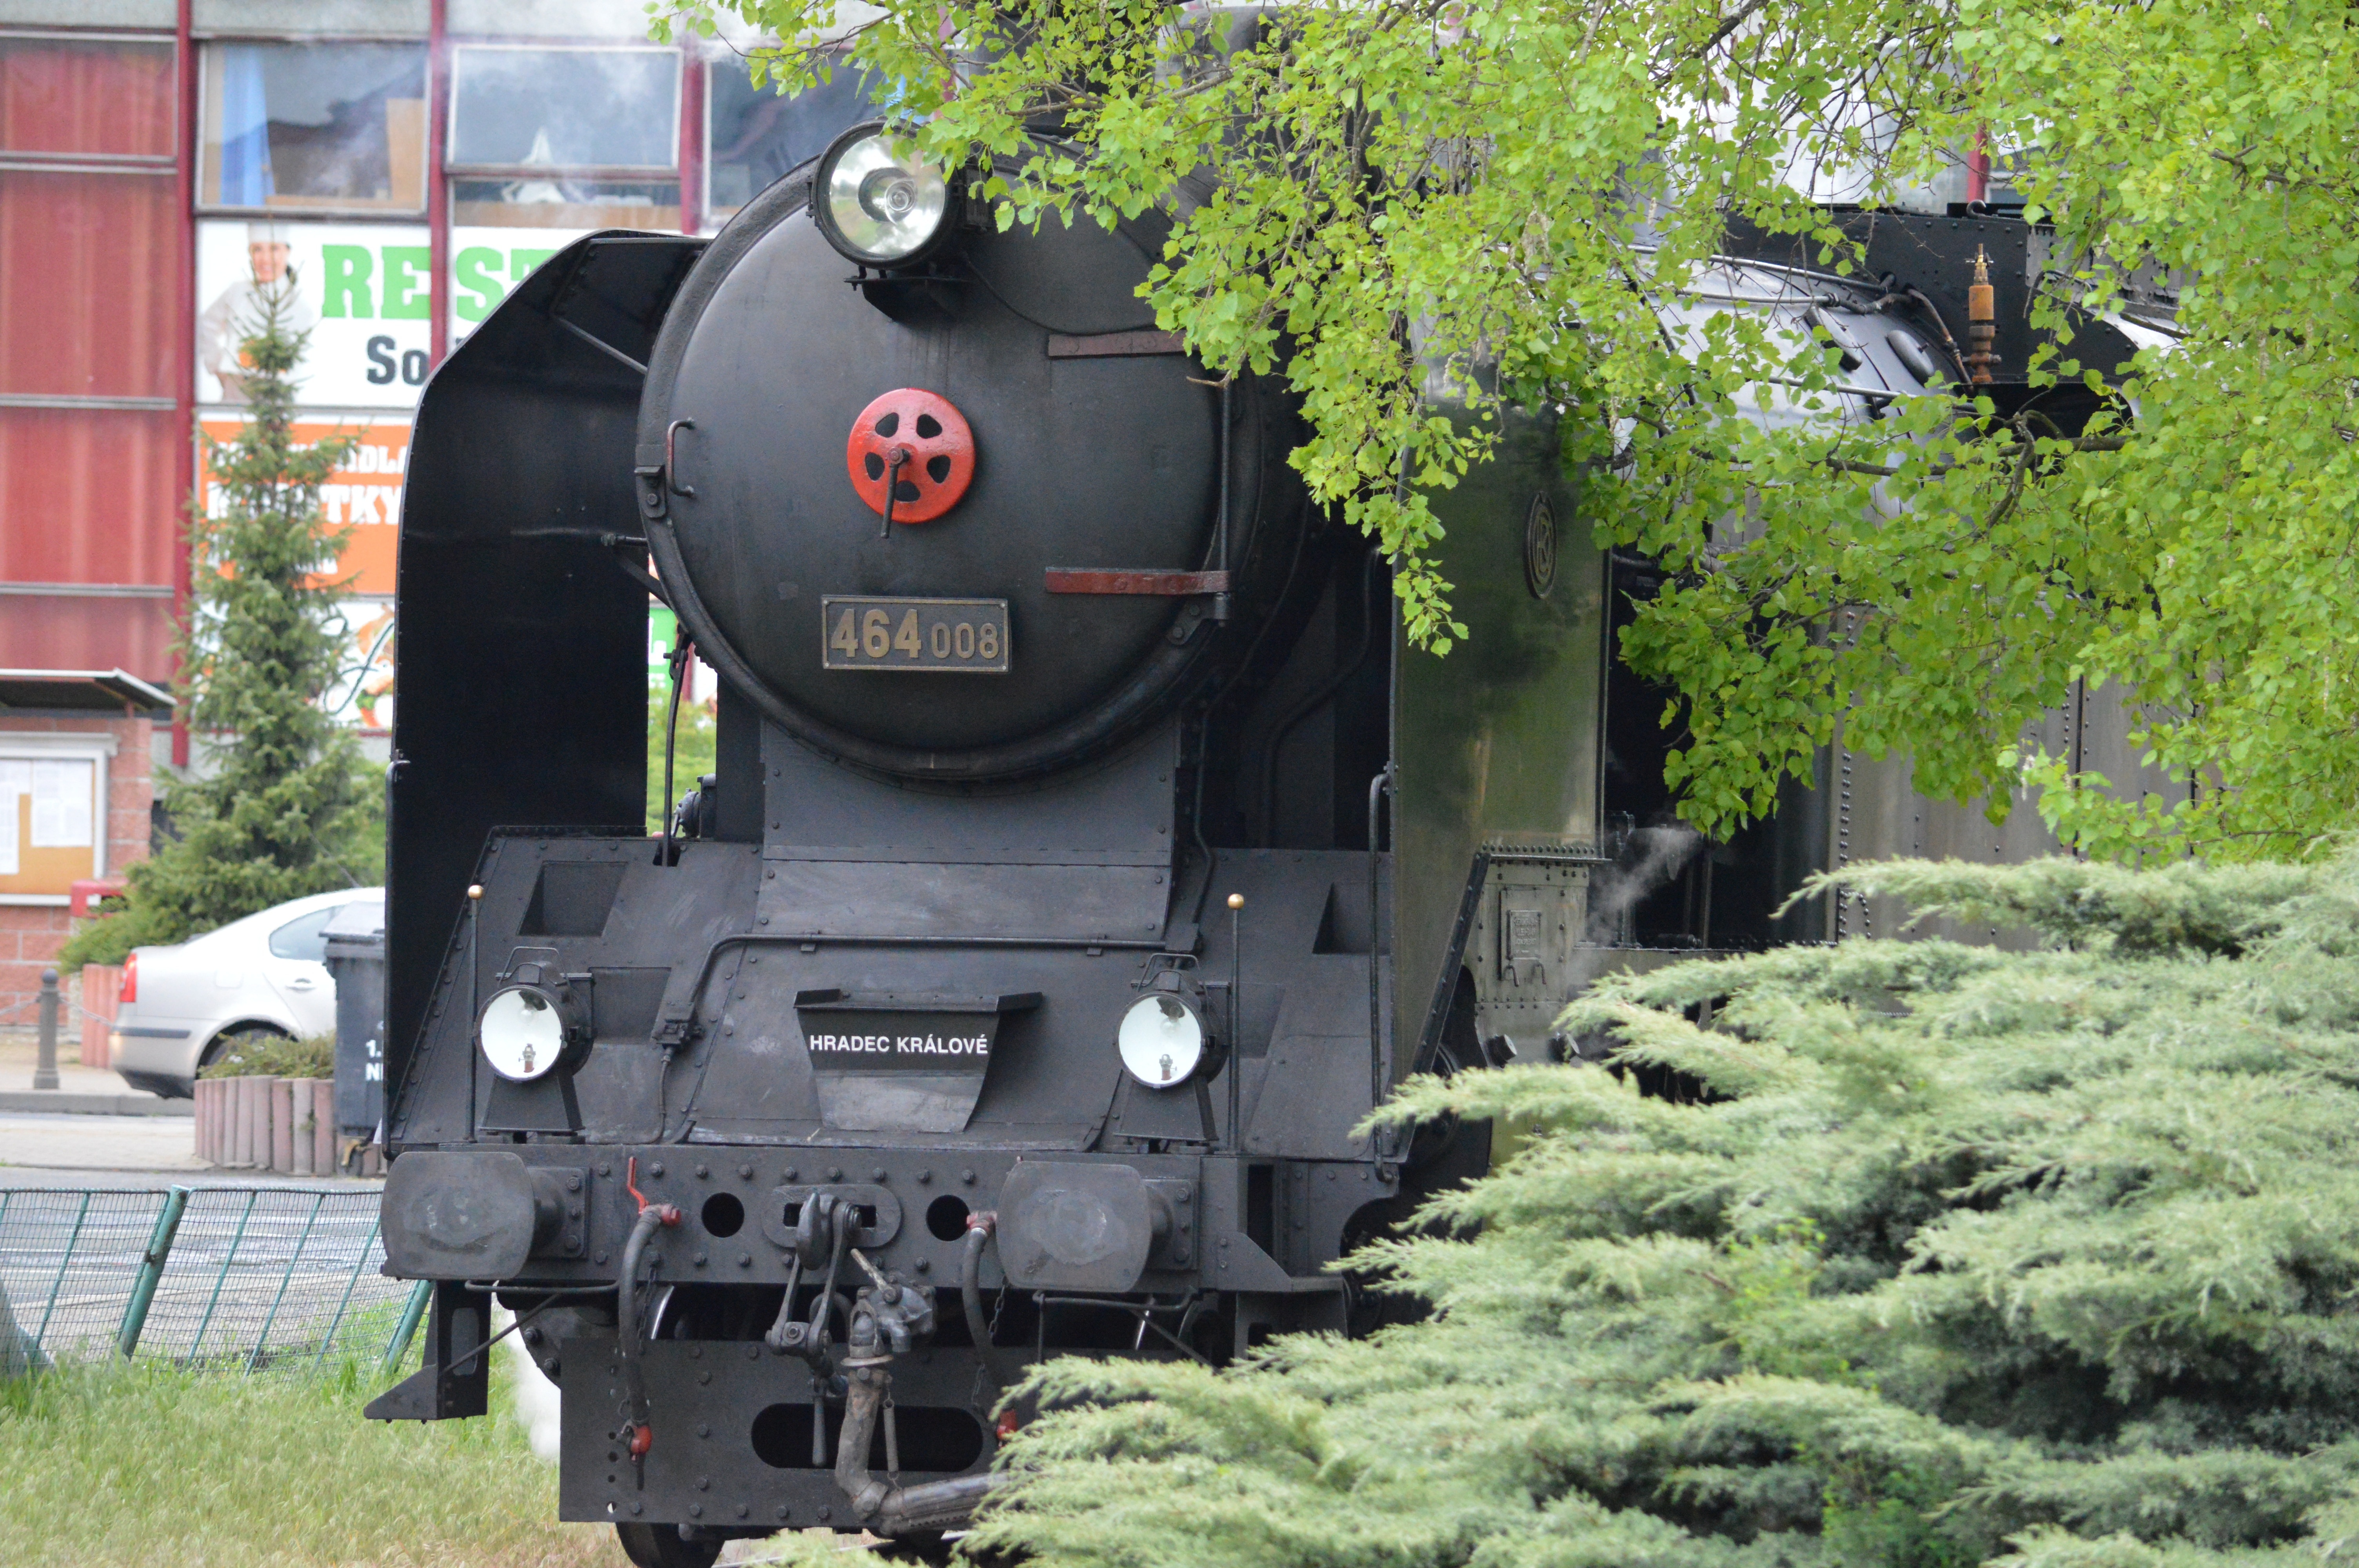 black locomotive with 464006 number